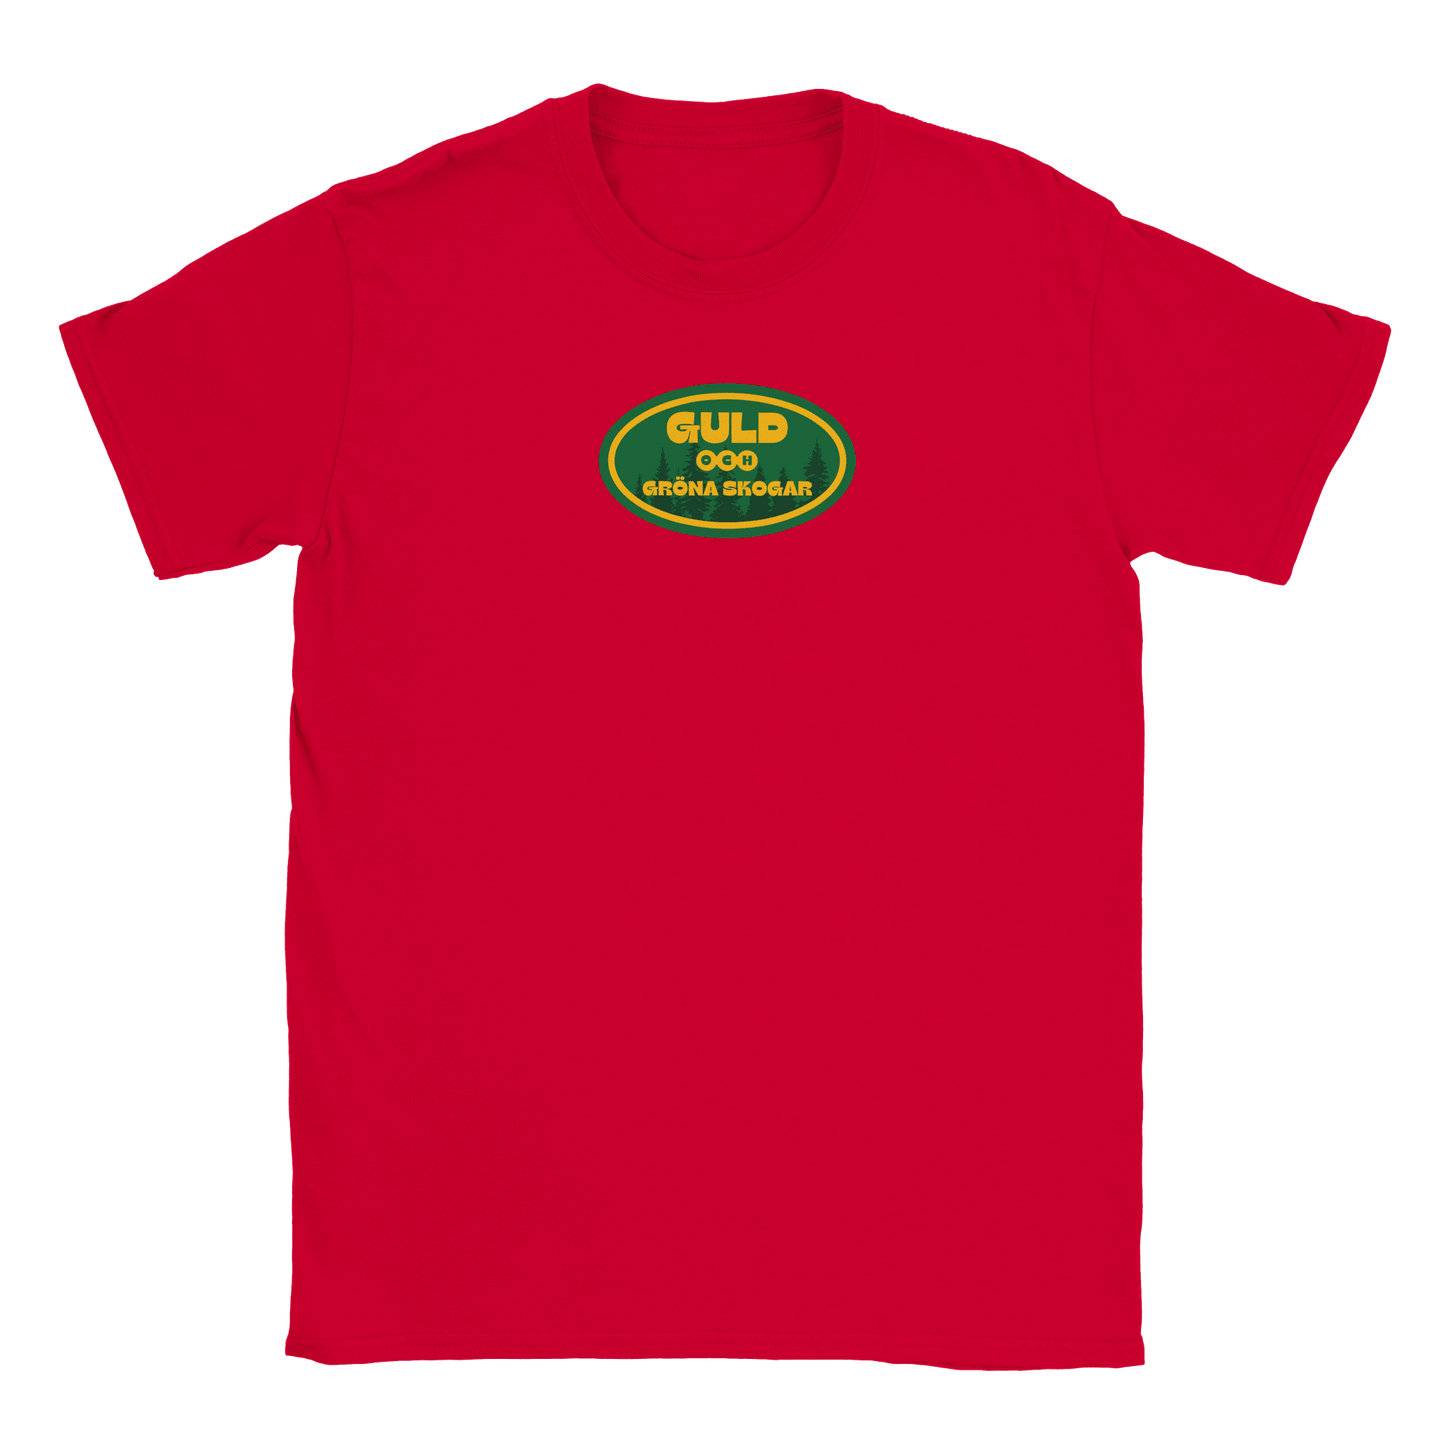 Guld och gröna skogar - T-shirt Röd